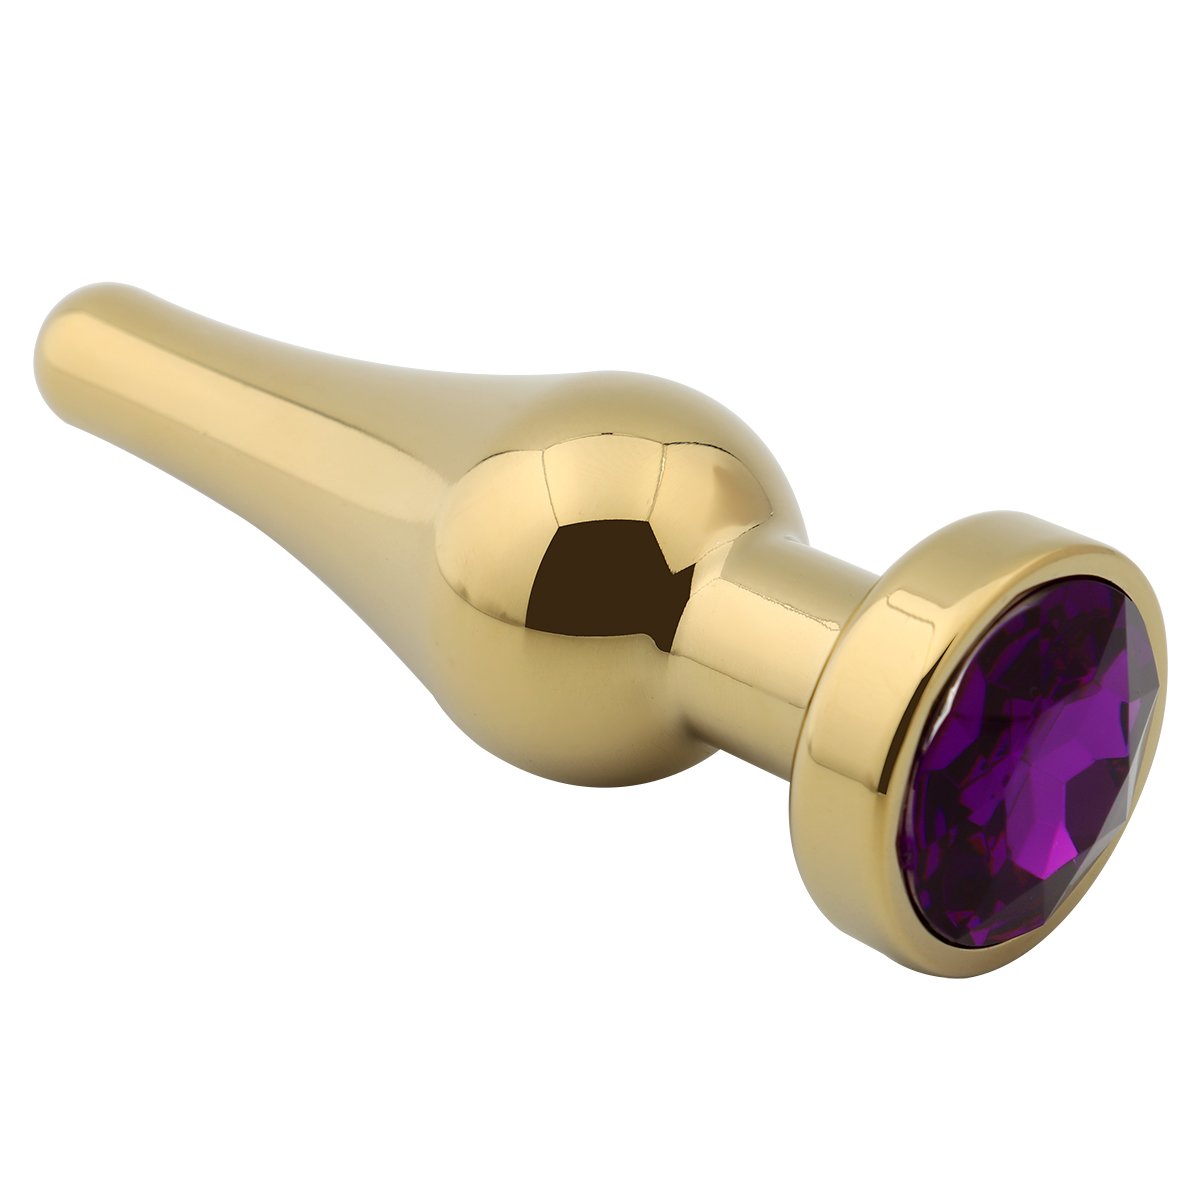 Foto van Banoch - Buttplug Lacrima Gold Purple Small - Metalen buttplug - Diamant steen - Paars